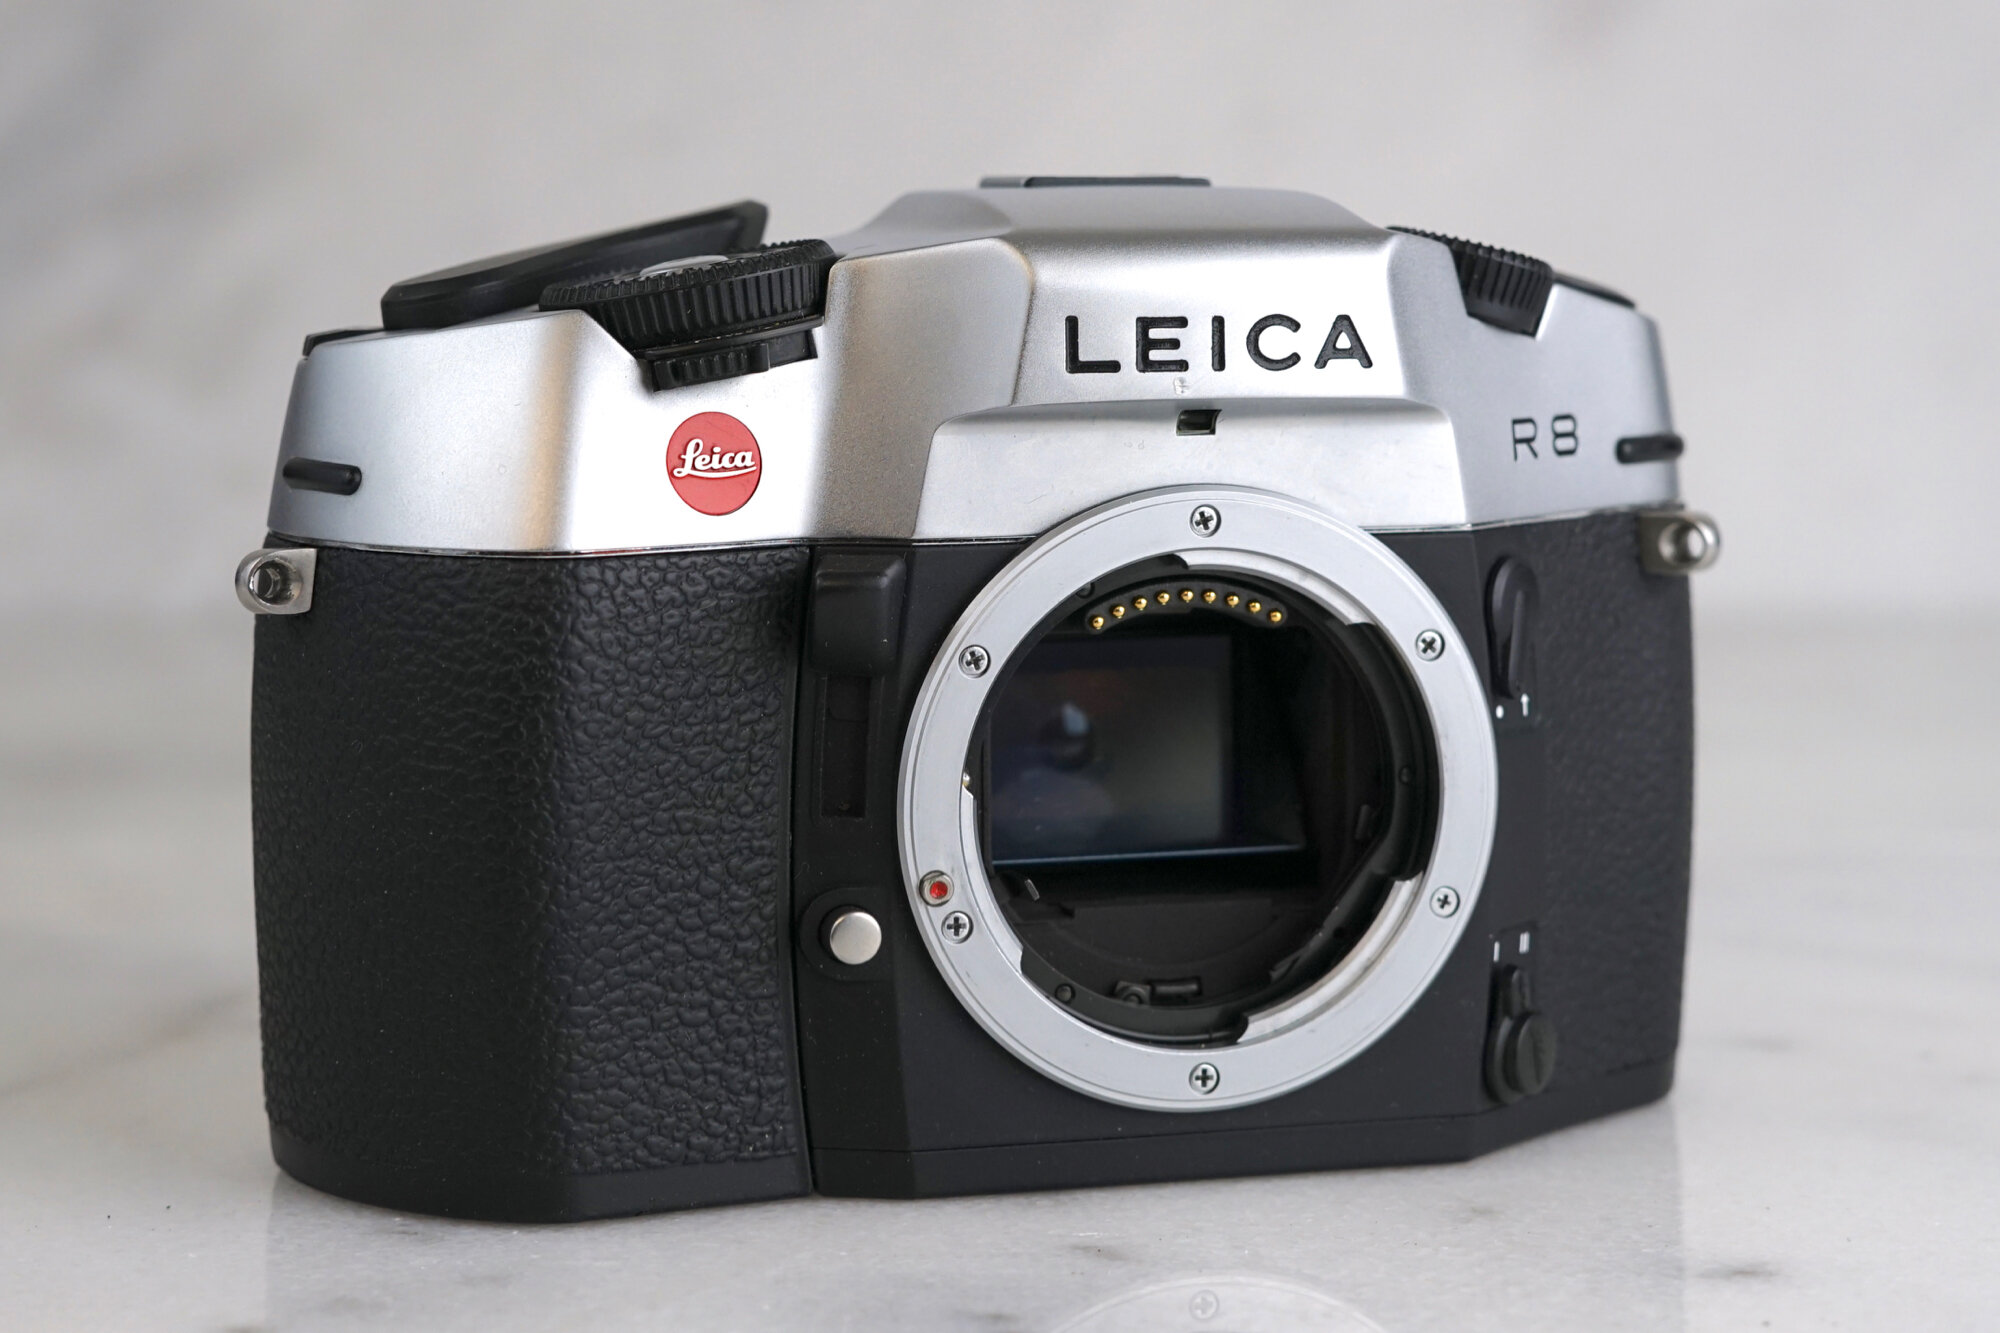 Leica R8 35mm Film SLR Camera For Sale — F Stop Cameras